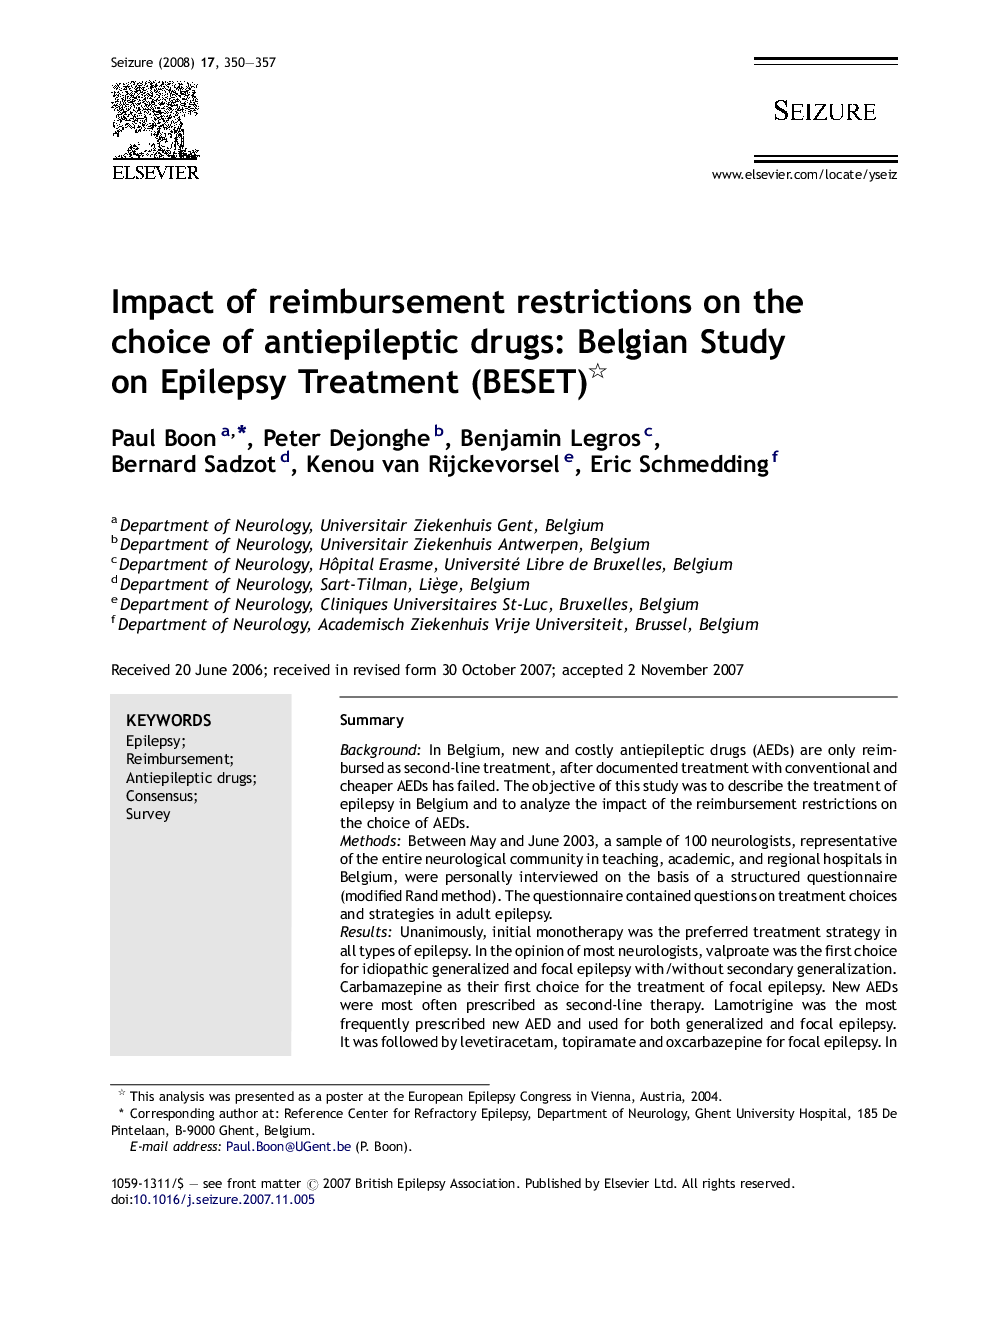 Impact of reimbursement restrictions on the choice of antiepileptic drugs: Belgian Study on Epilepsy Treatment (BESET) 